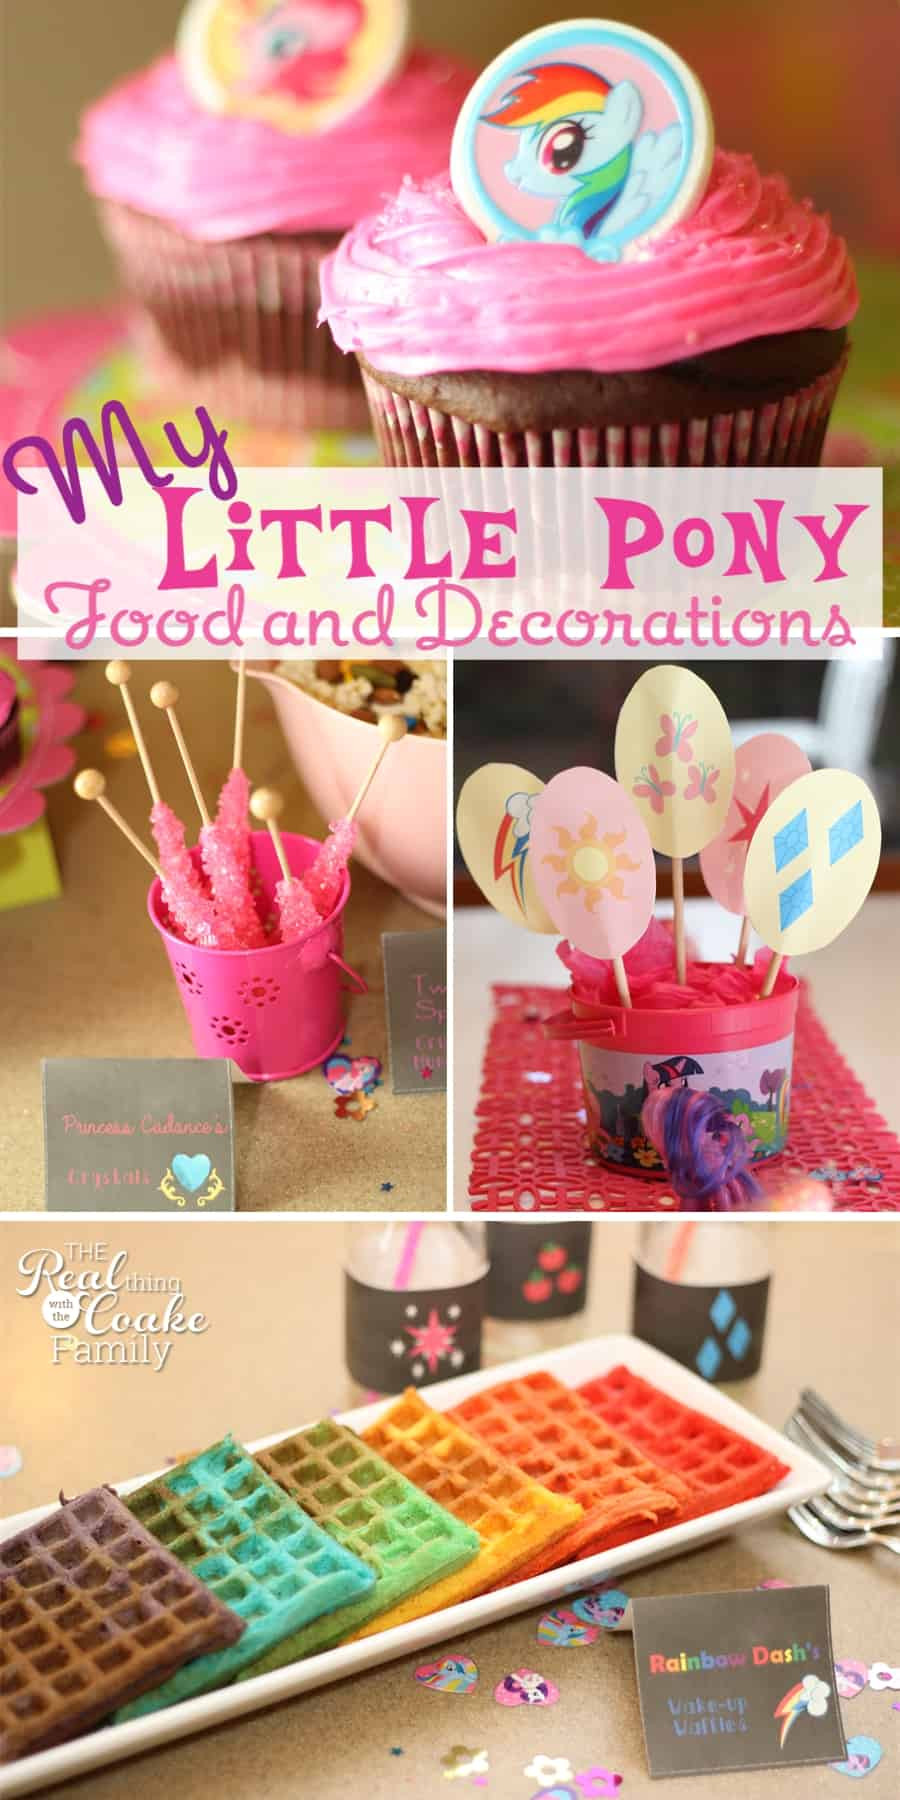 Pony Birthday Party Ideas
 My Little Pony Birthday Party Food and Decorating Ideas